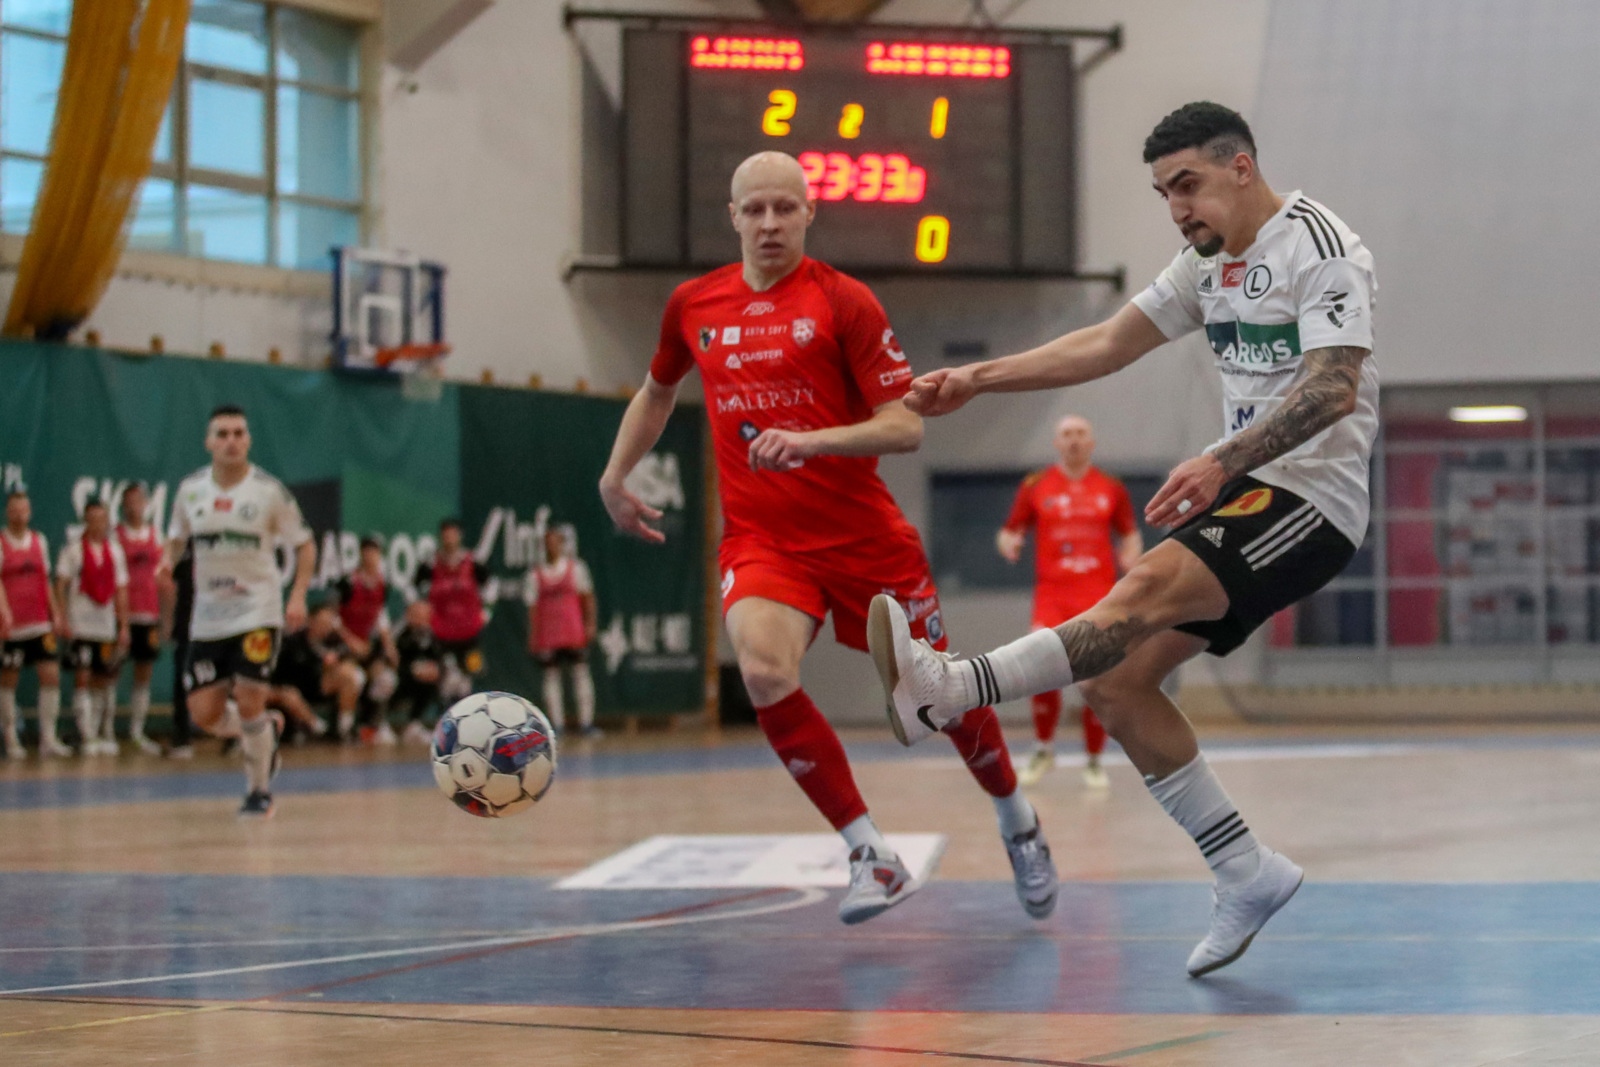 Legia Warszawa - Futsal Leszno 6:2